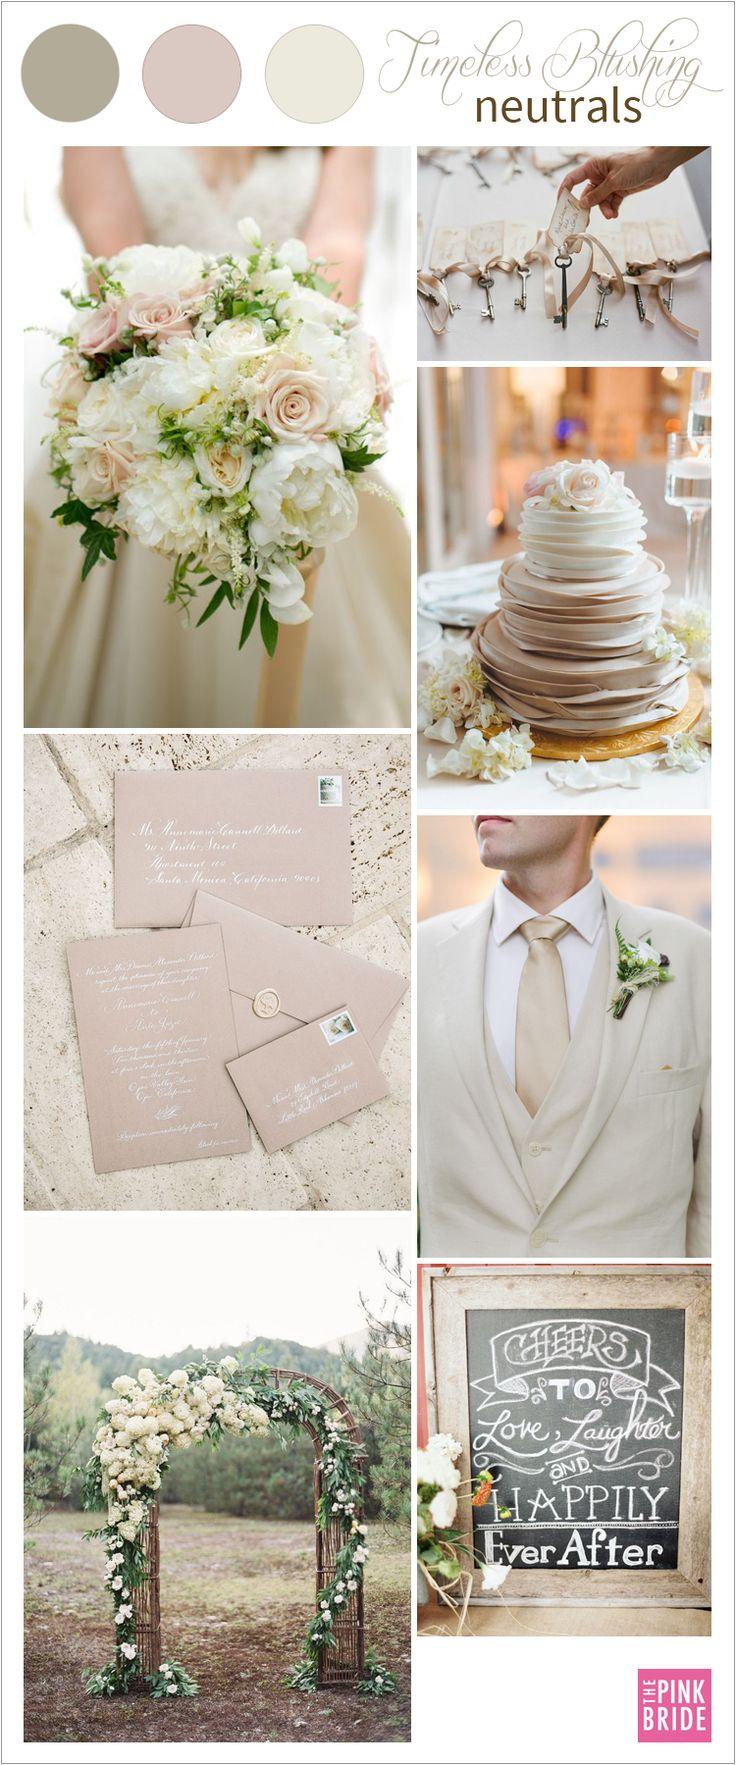 Hochzeit - Wedding Color Board: Timeless Blushing Neutrals